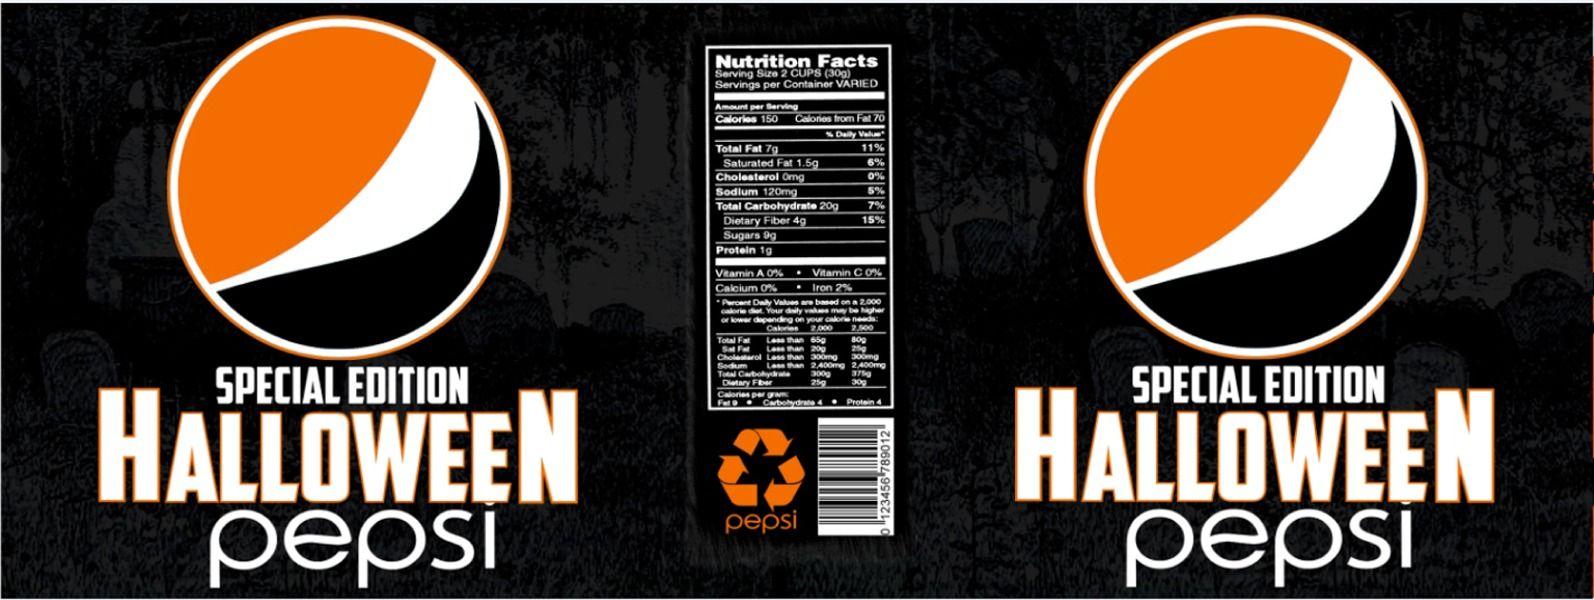 Halloween Pepsi Logo - The Holidaze: Halloween Soda?